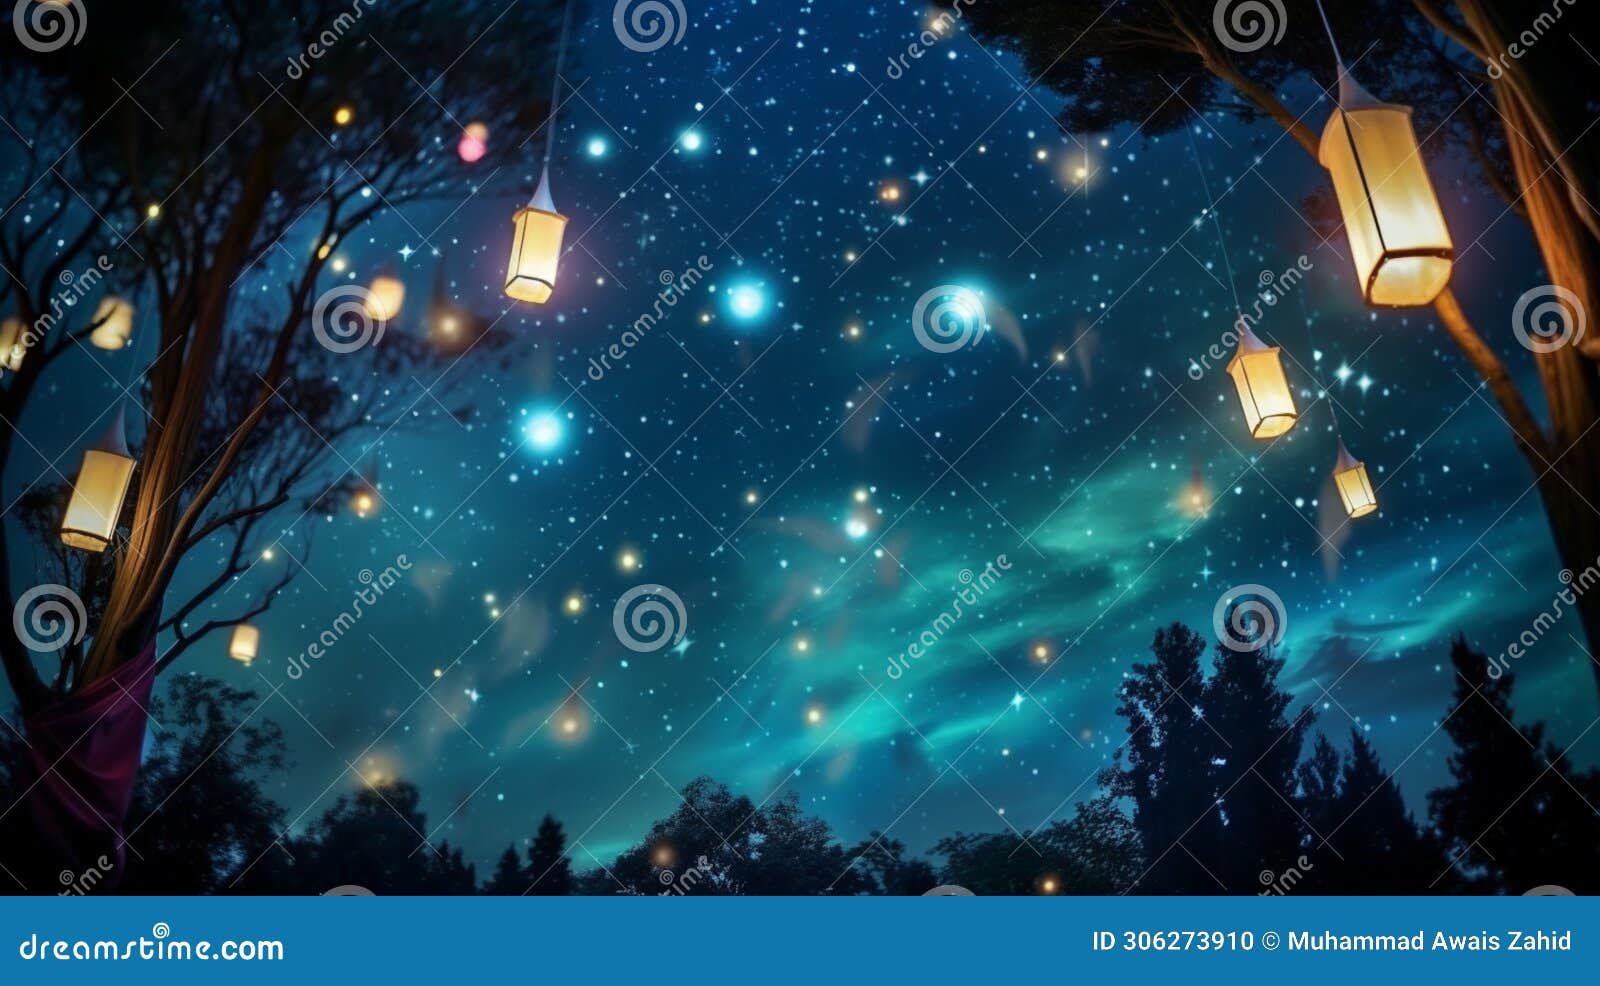 night sky adorned with a myriad of vibrant lanterns soaring upwards.